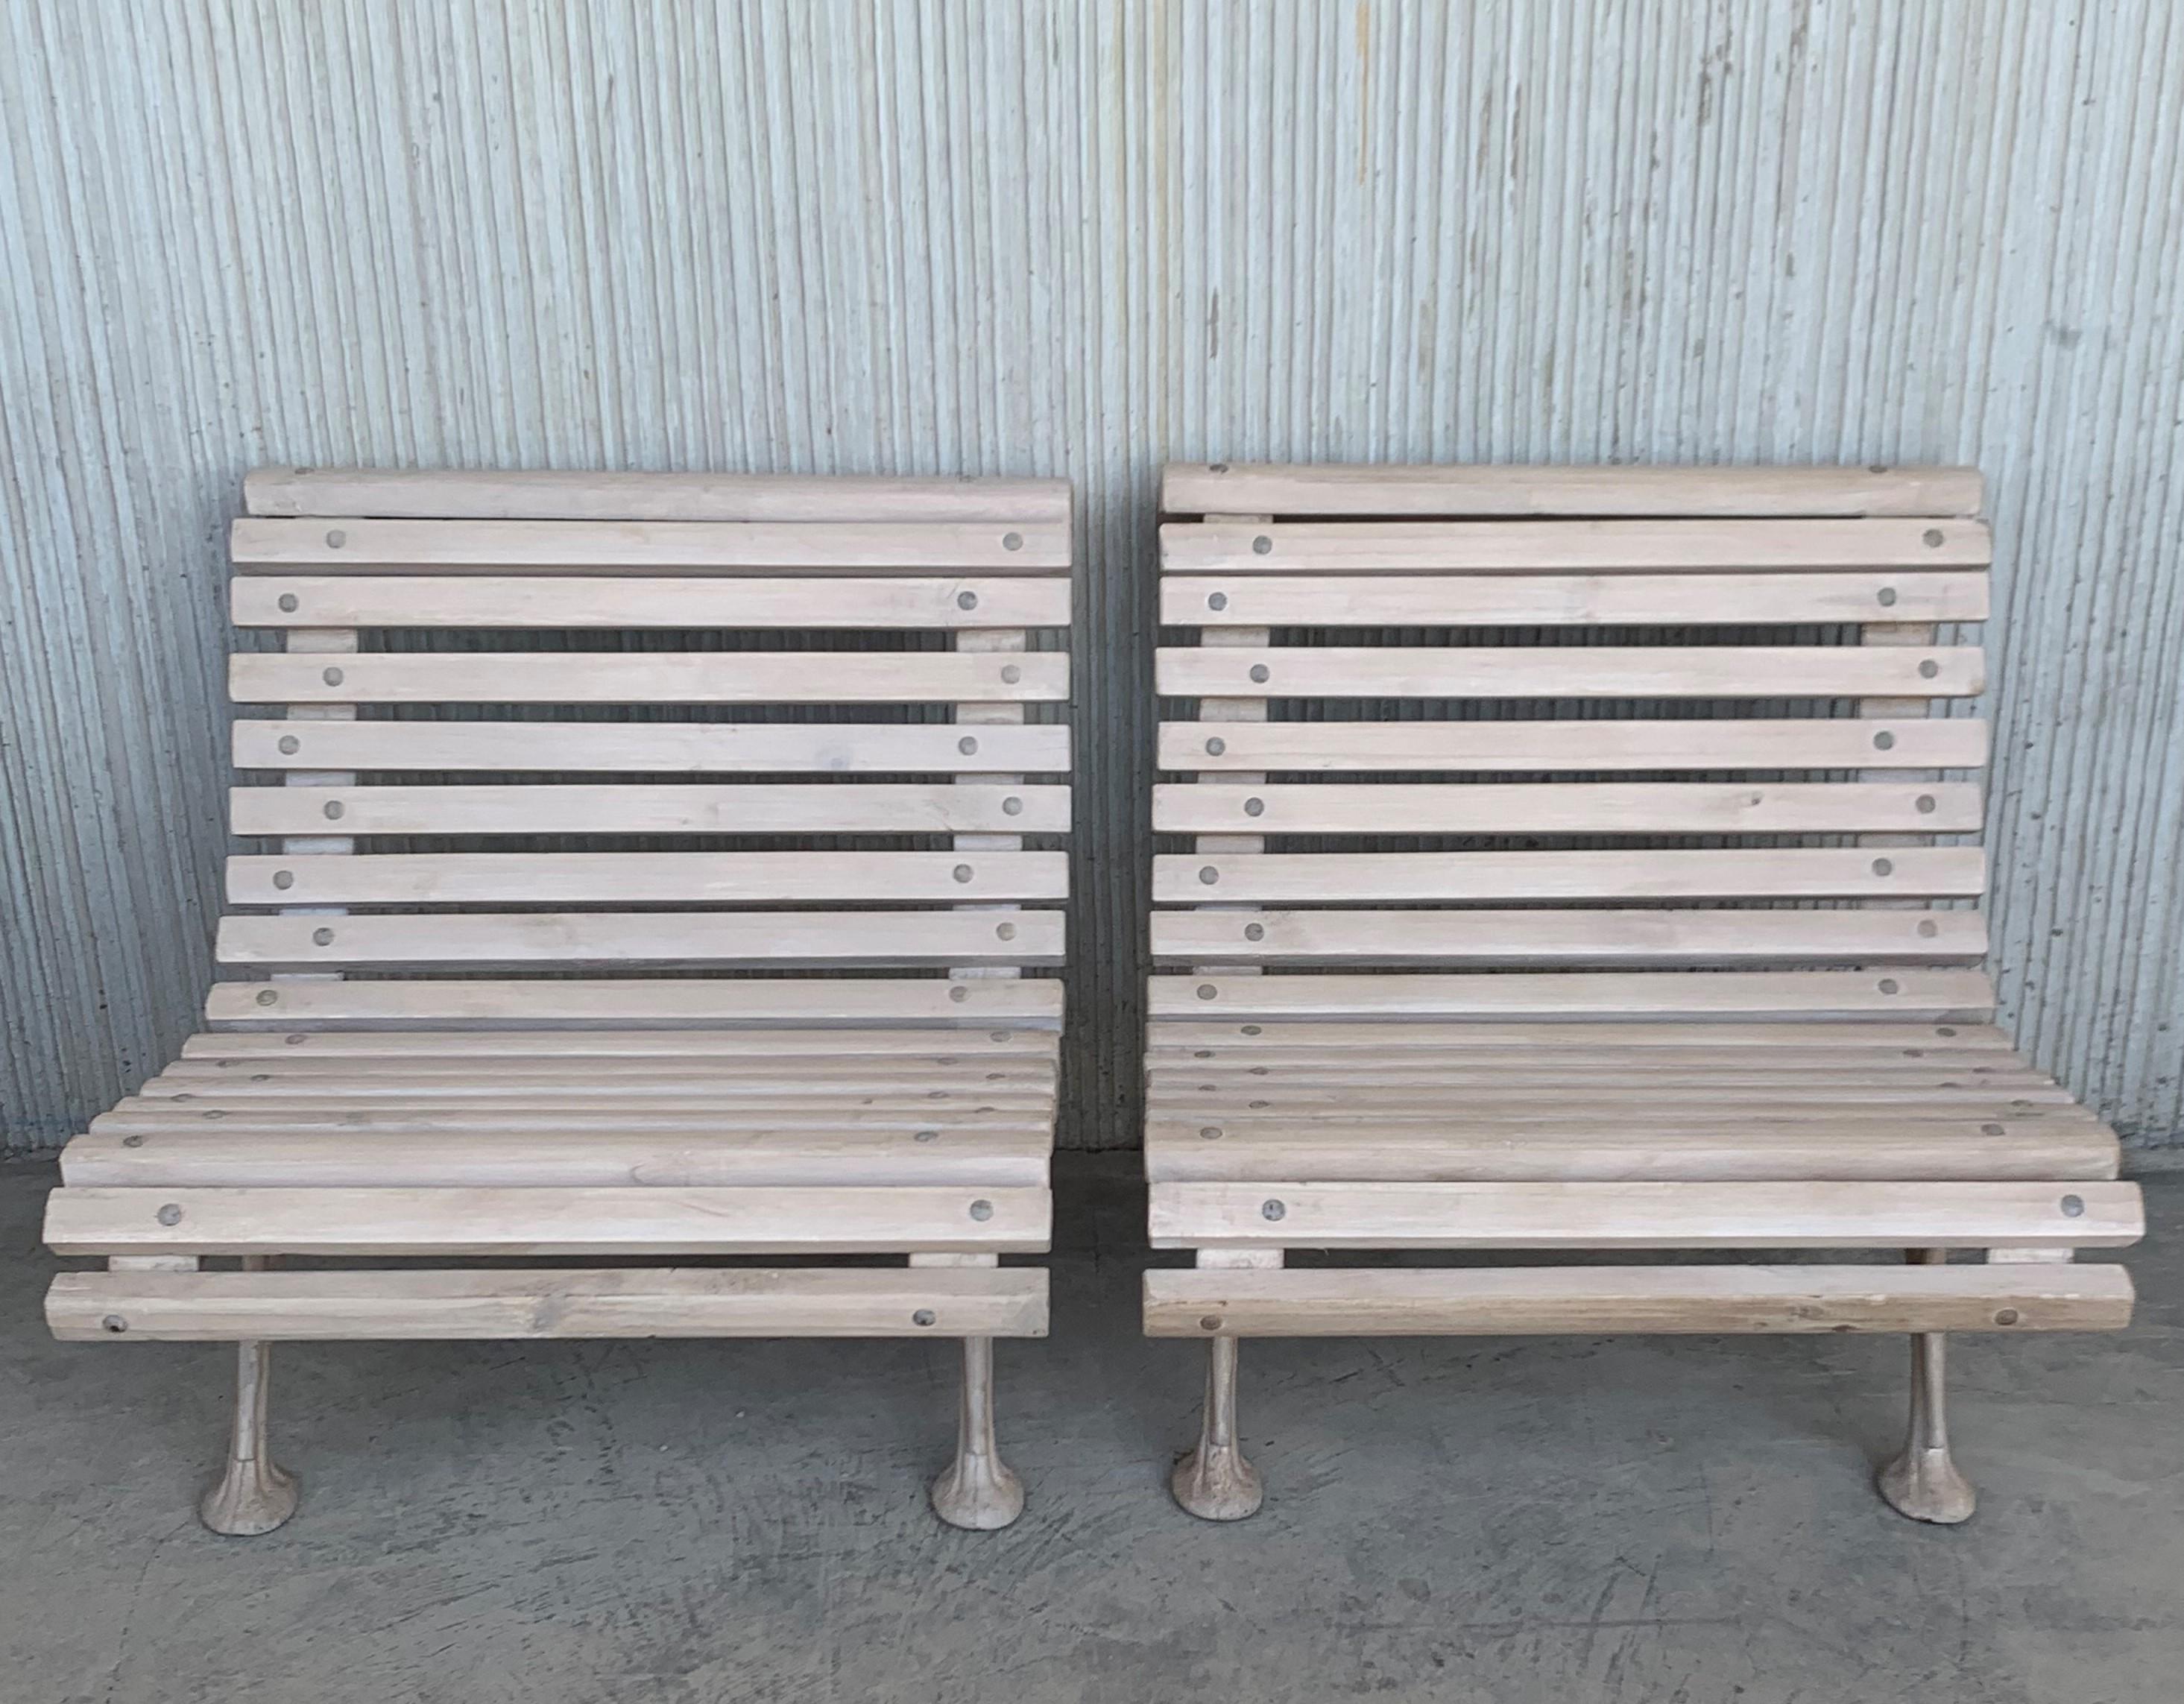 wooden benchs